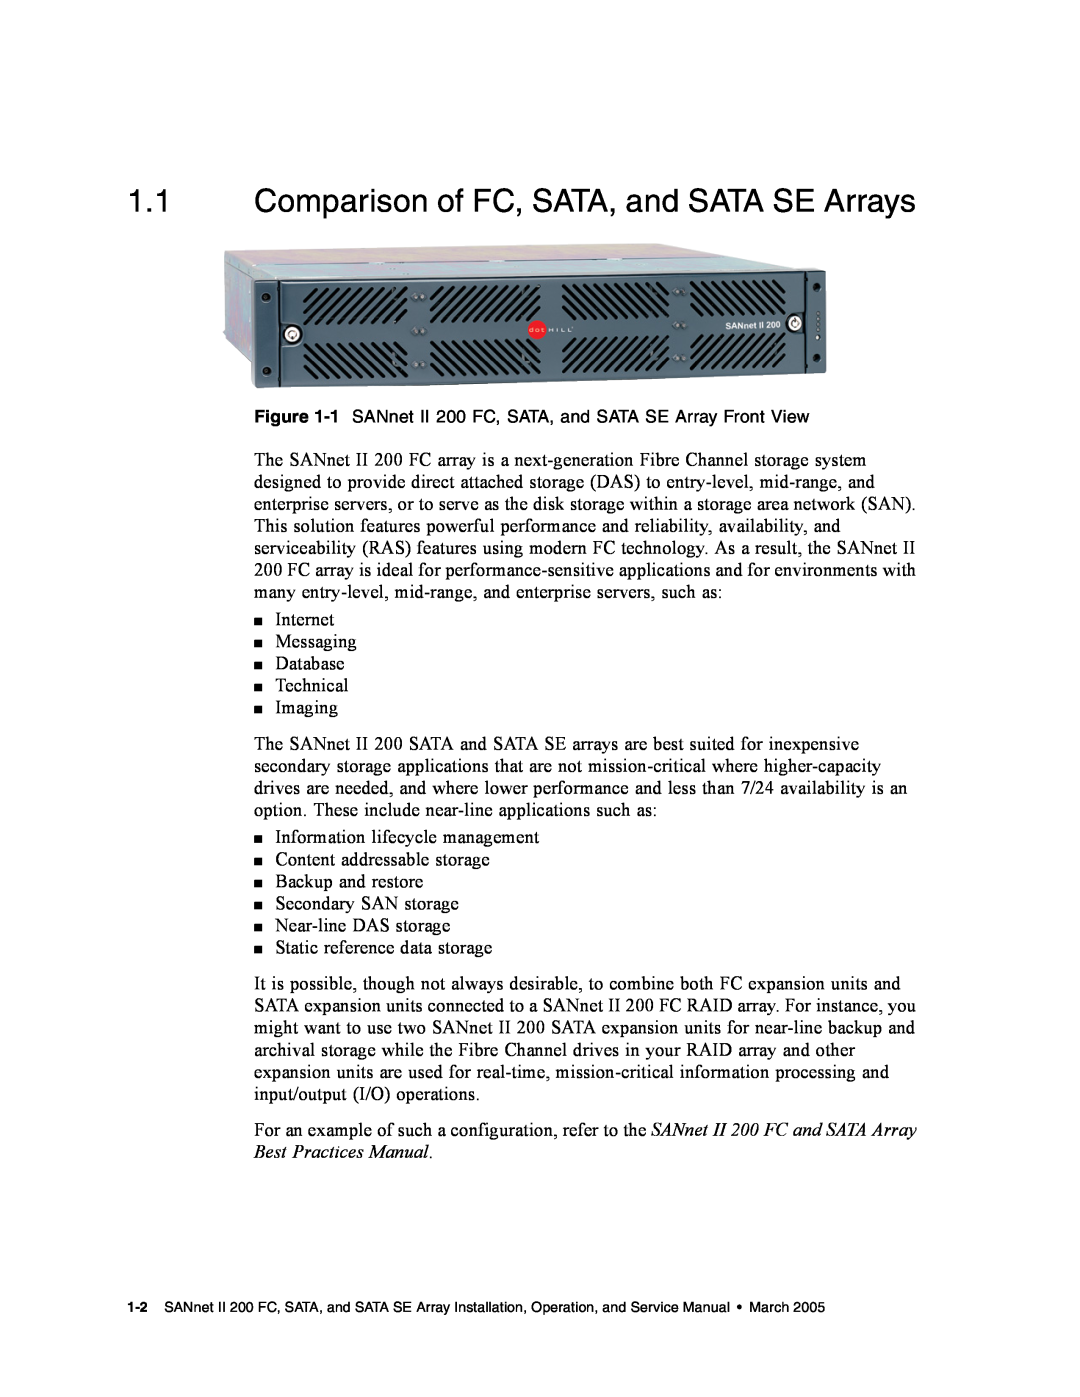 Dot Hill Systems II 200 FC service manual Comparison of FC, SATA, and SATA SE Arrays 